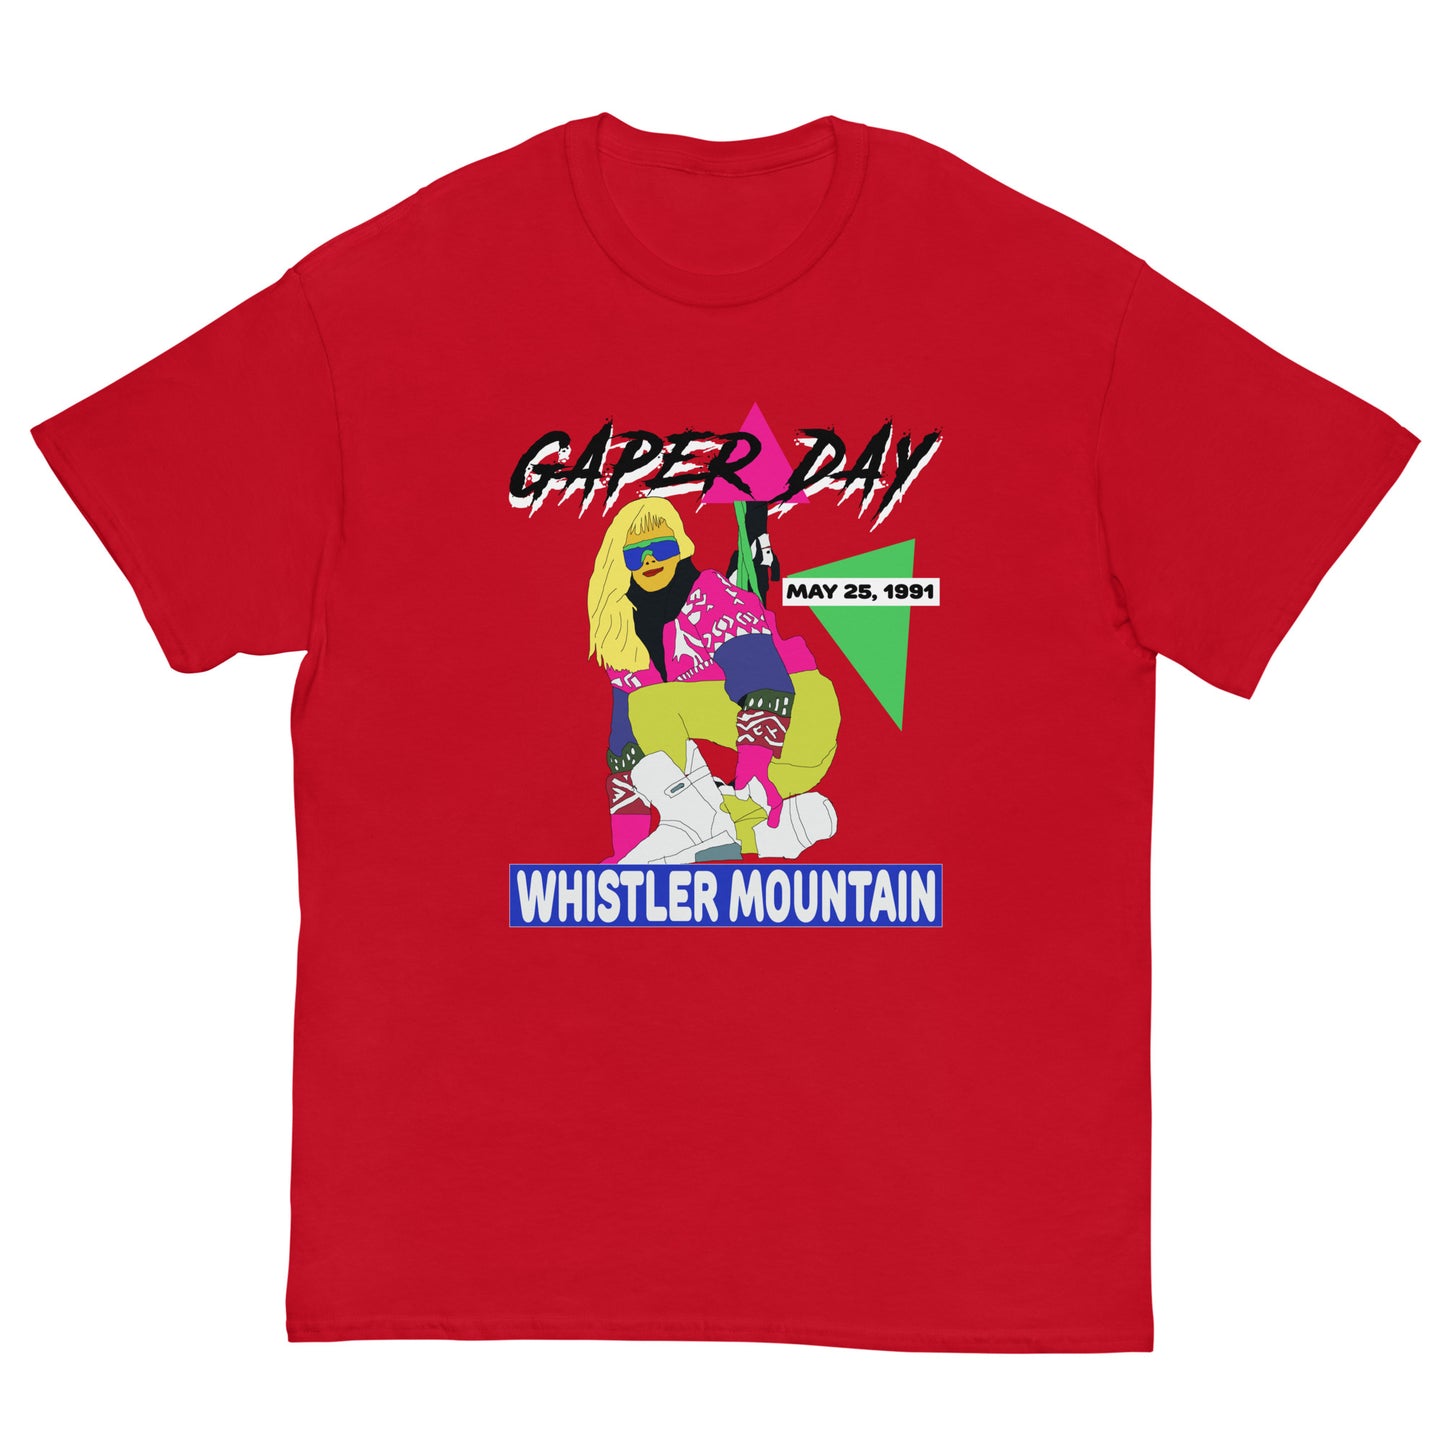 Gaper day 1991 Whistler mountain printed t-shirt